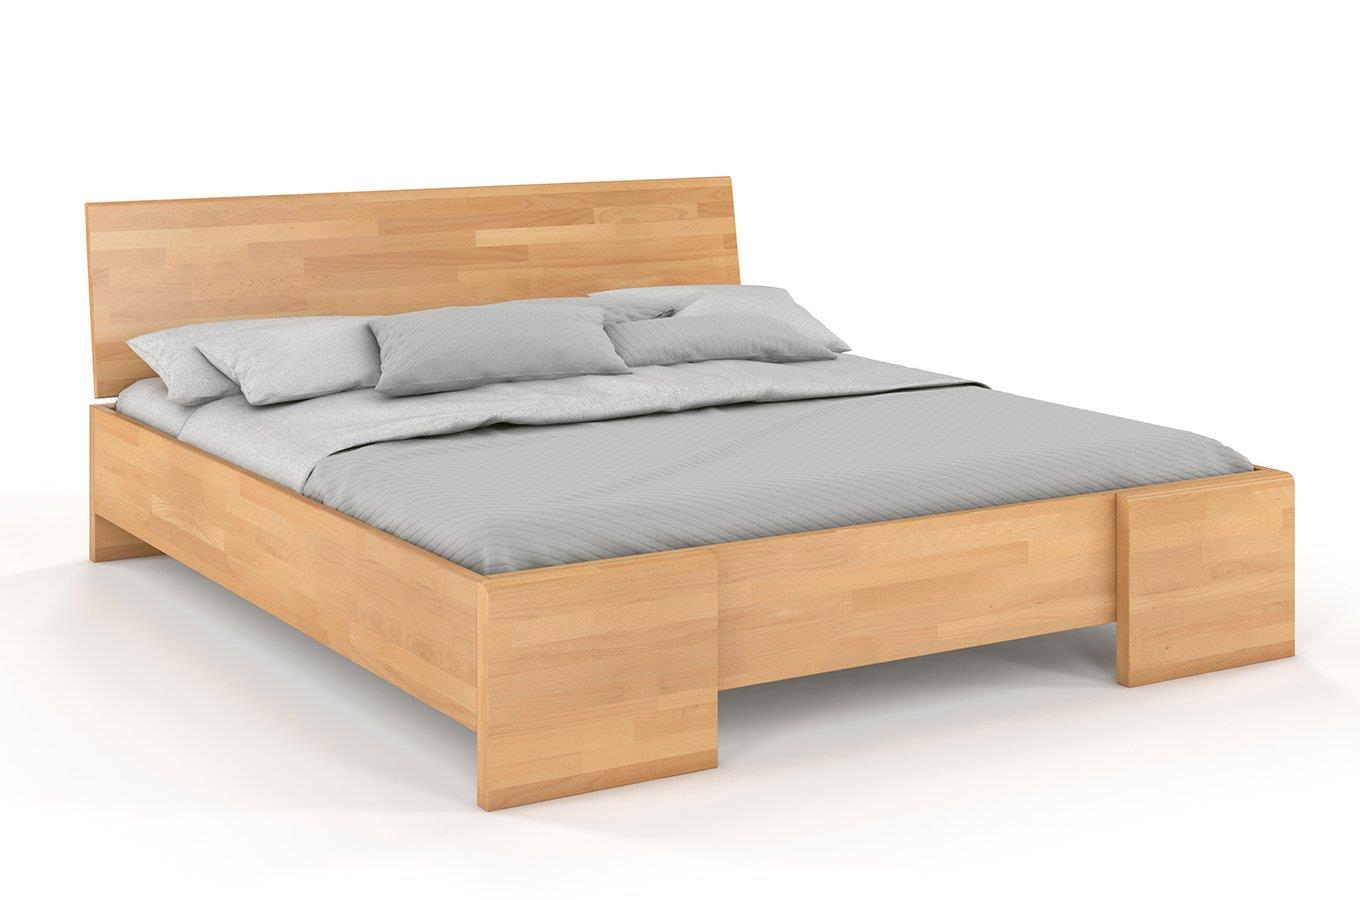 Łóżko drewniane bukowe Visby Hessler High BC (skrzynia na pościel) / 200x200 cm, kolor naturalny